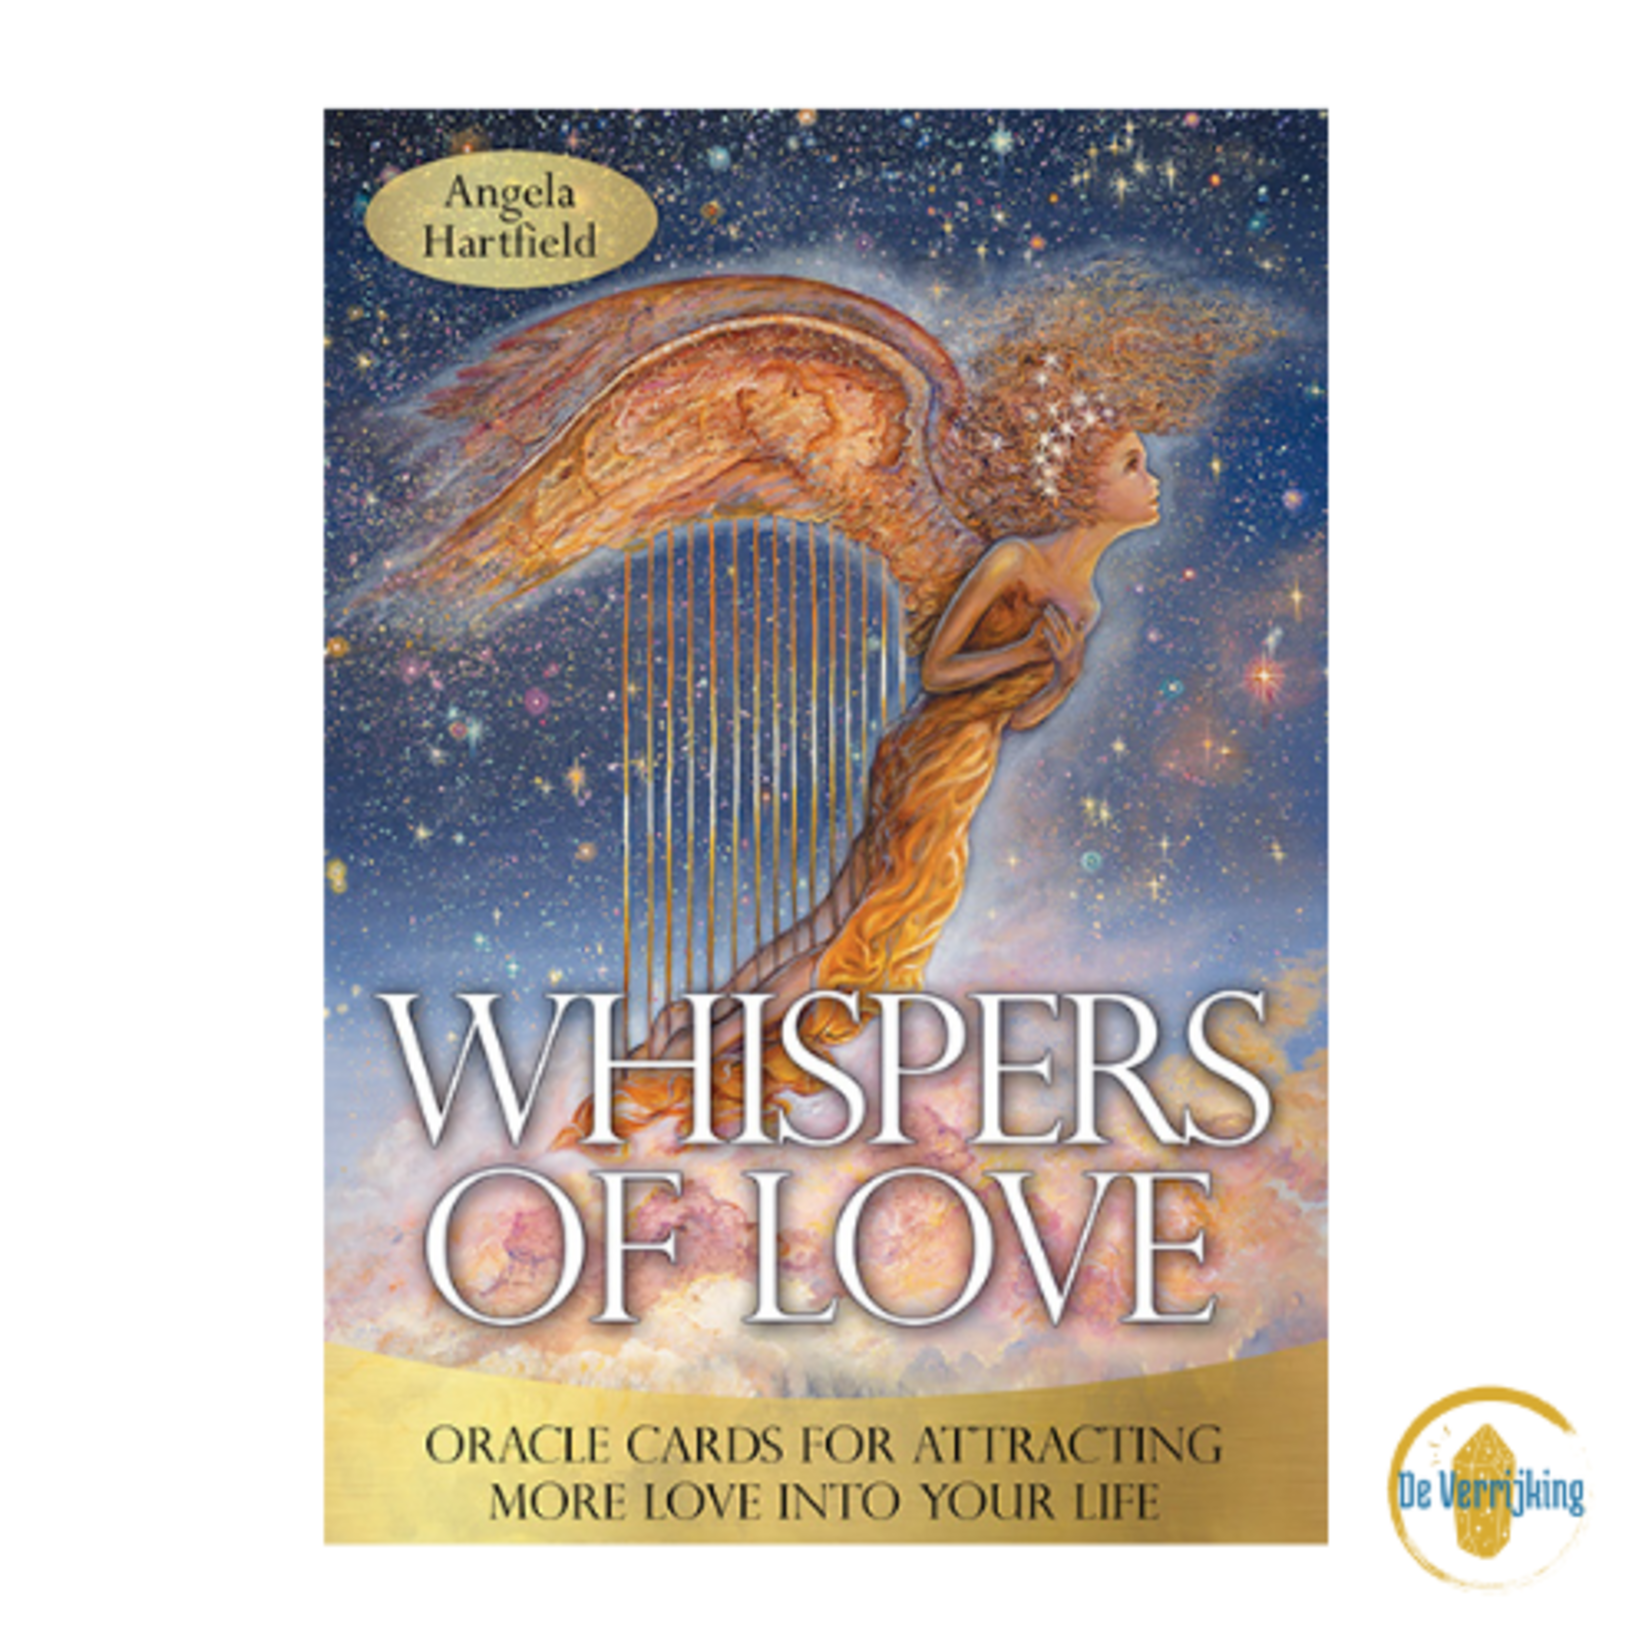 De Verrijking Whispers of Love Oracle cards